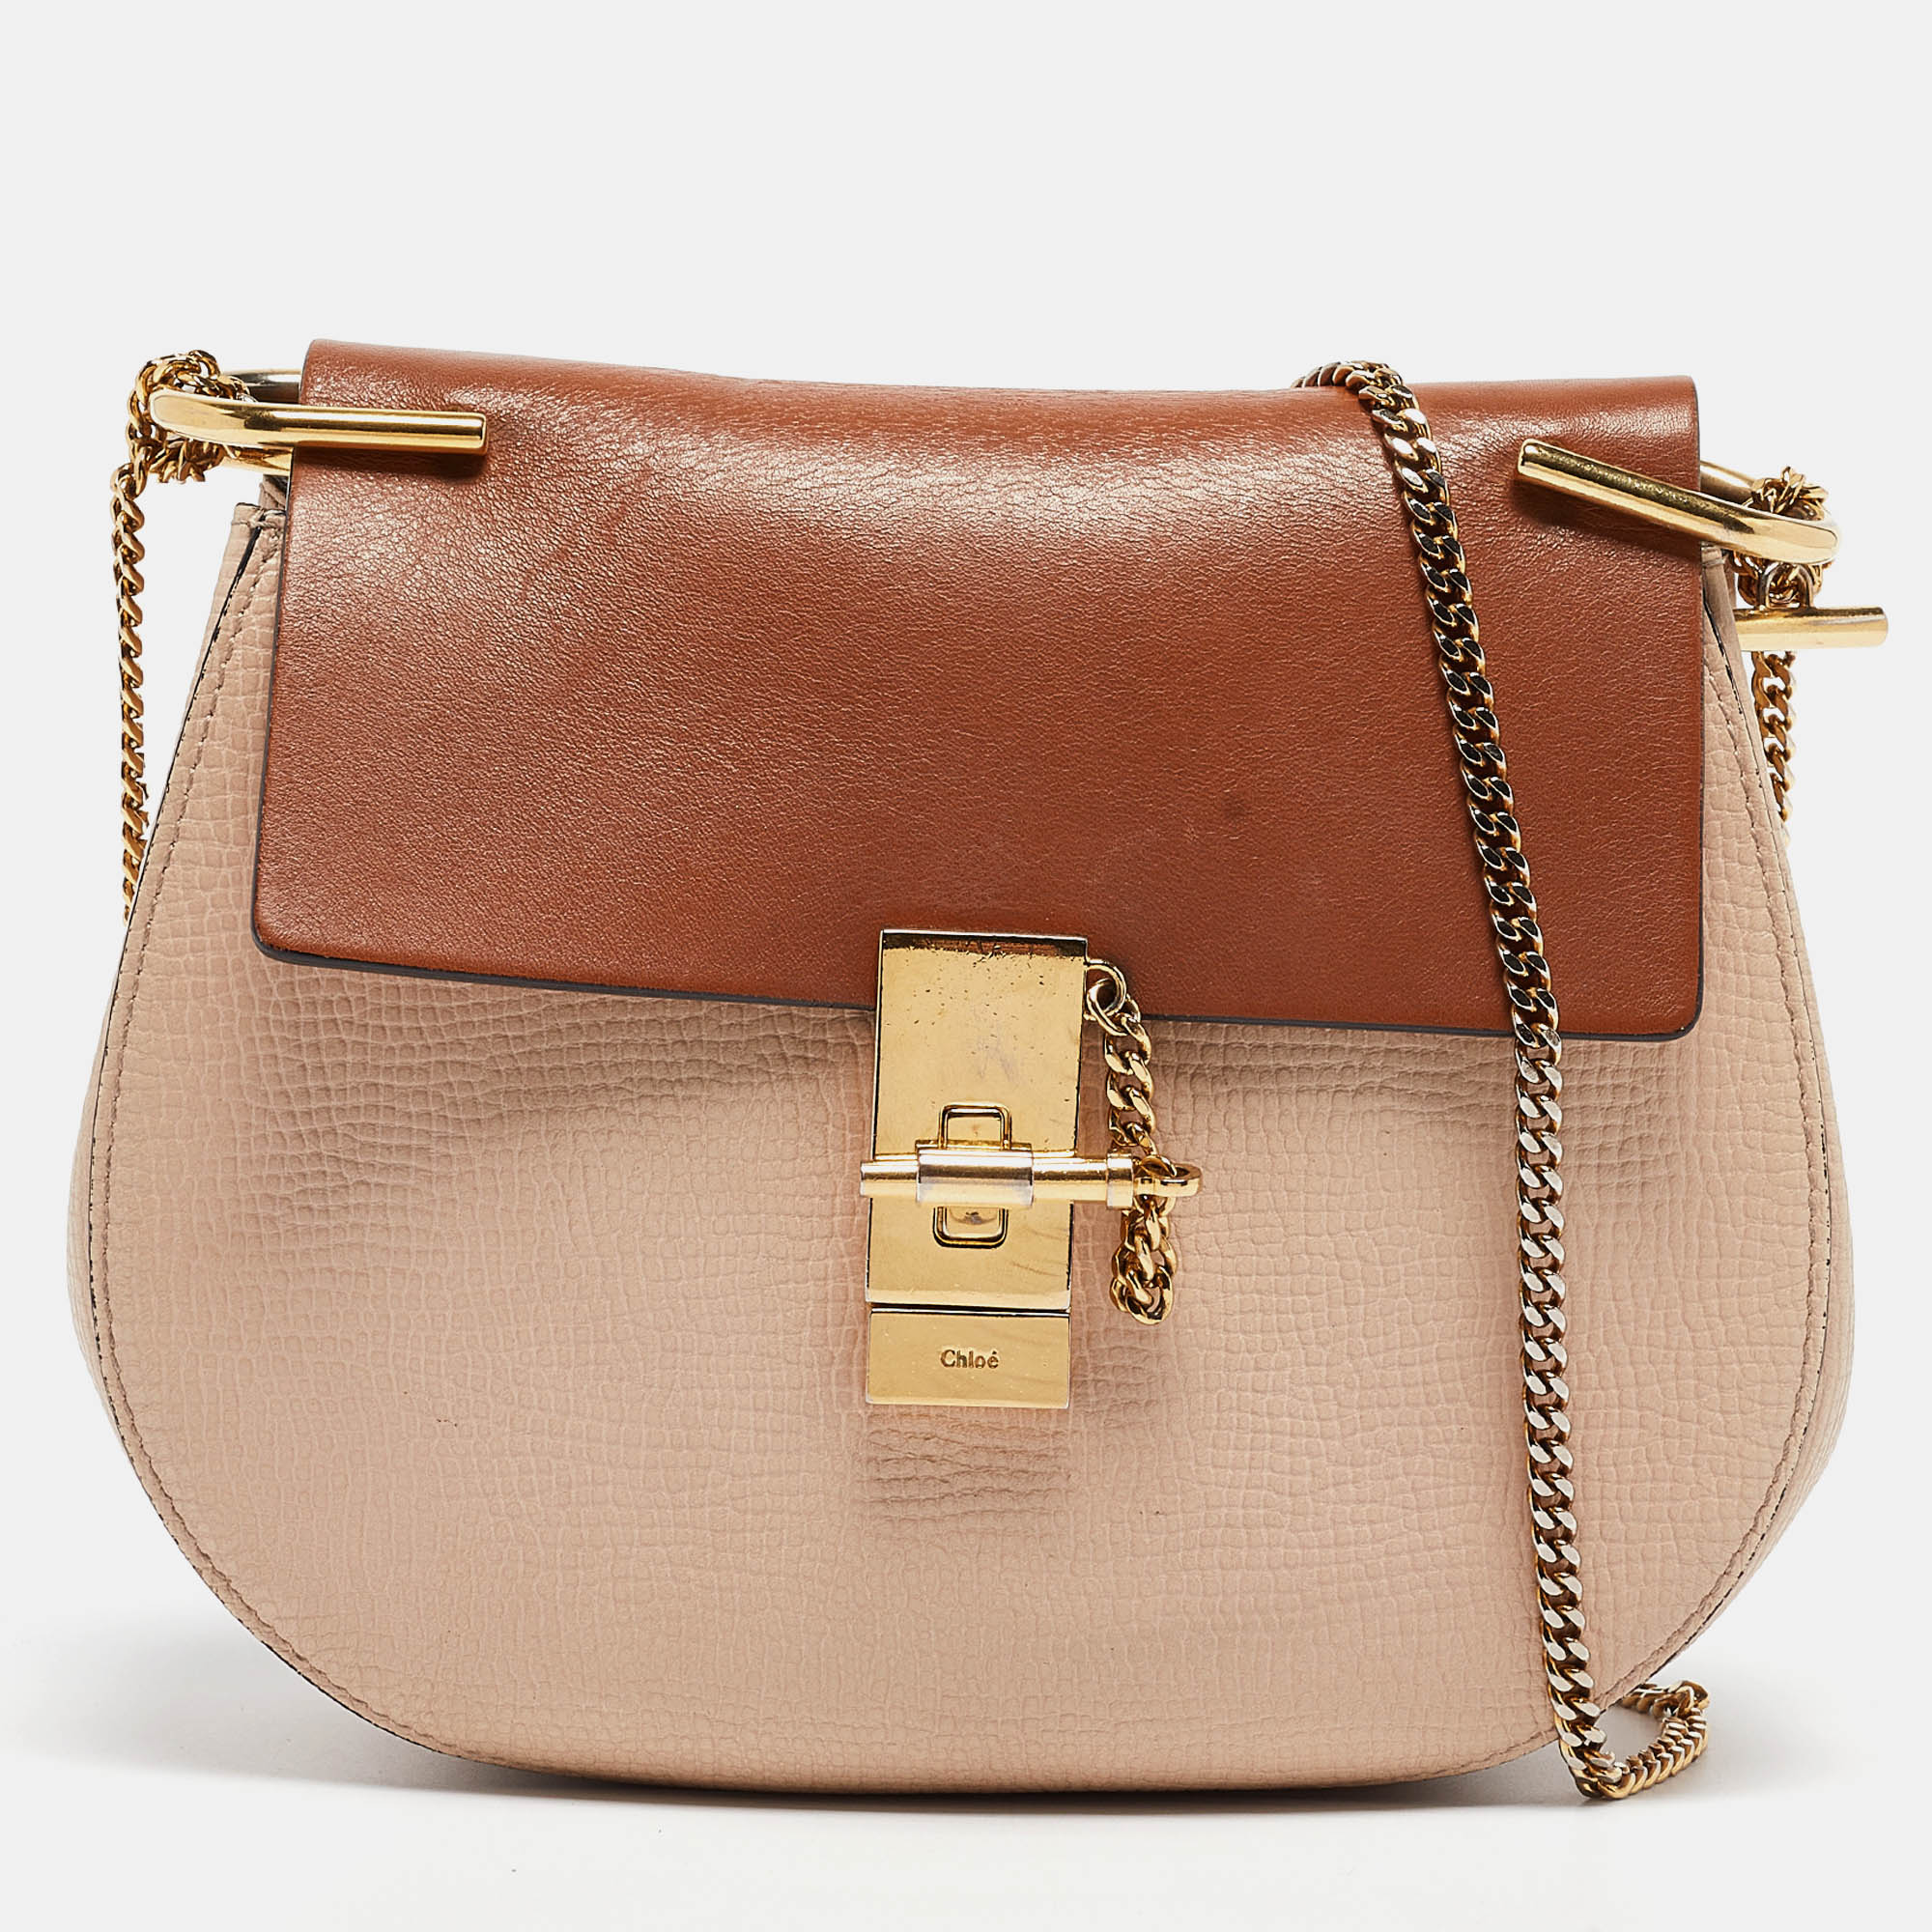 Chloe brown/light beige grain leather medium drew shoulder bag